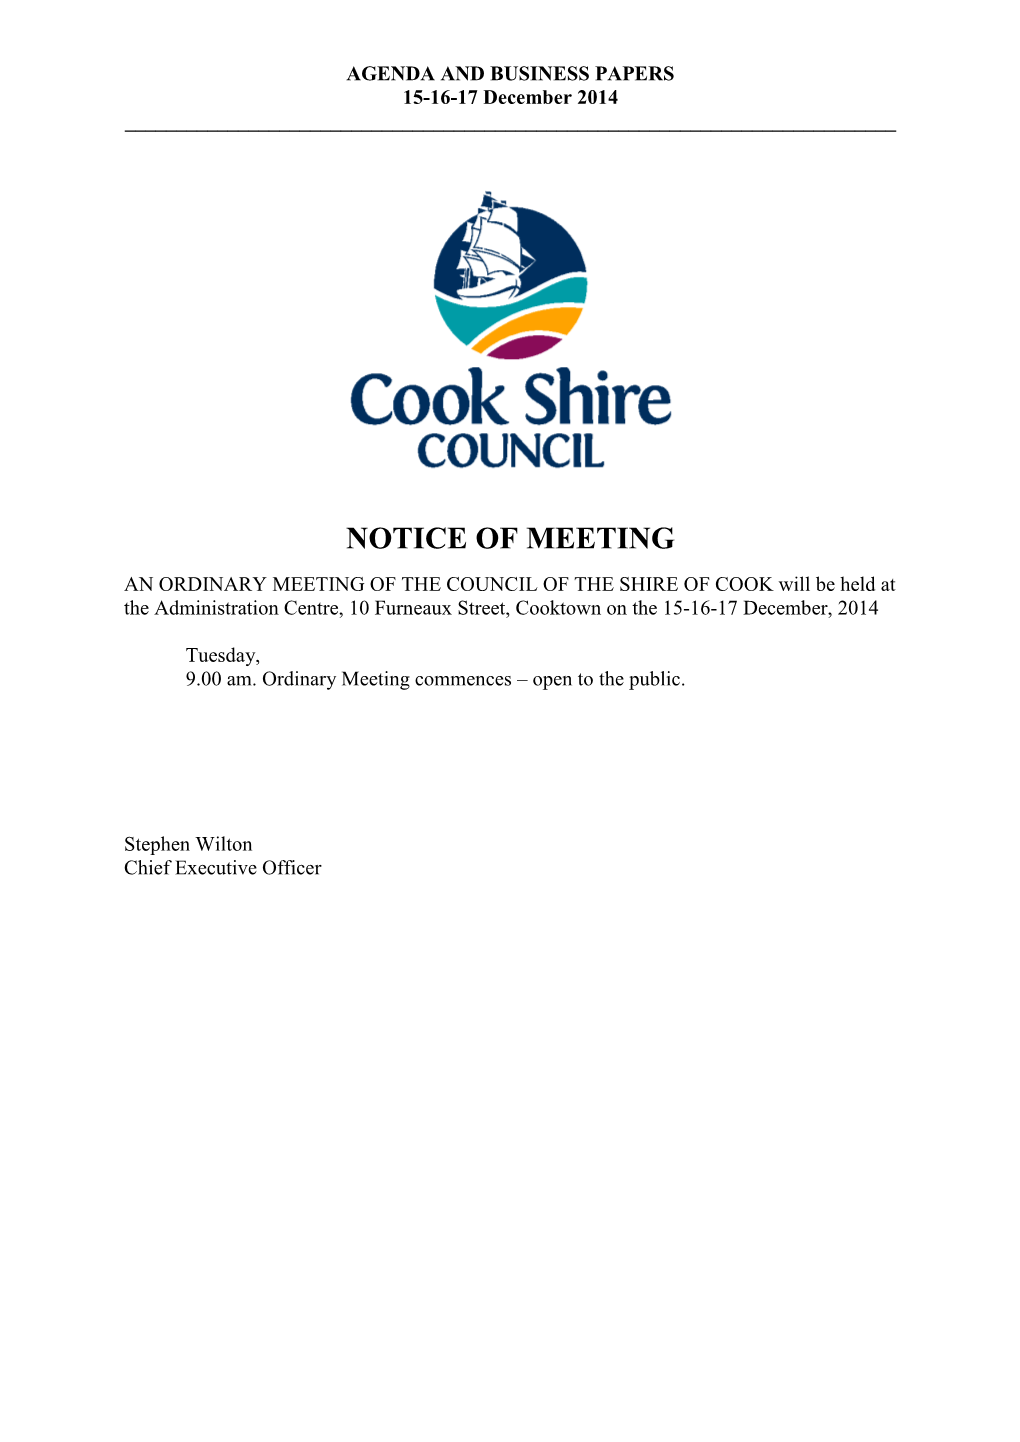 Cook Shire Council Agenda